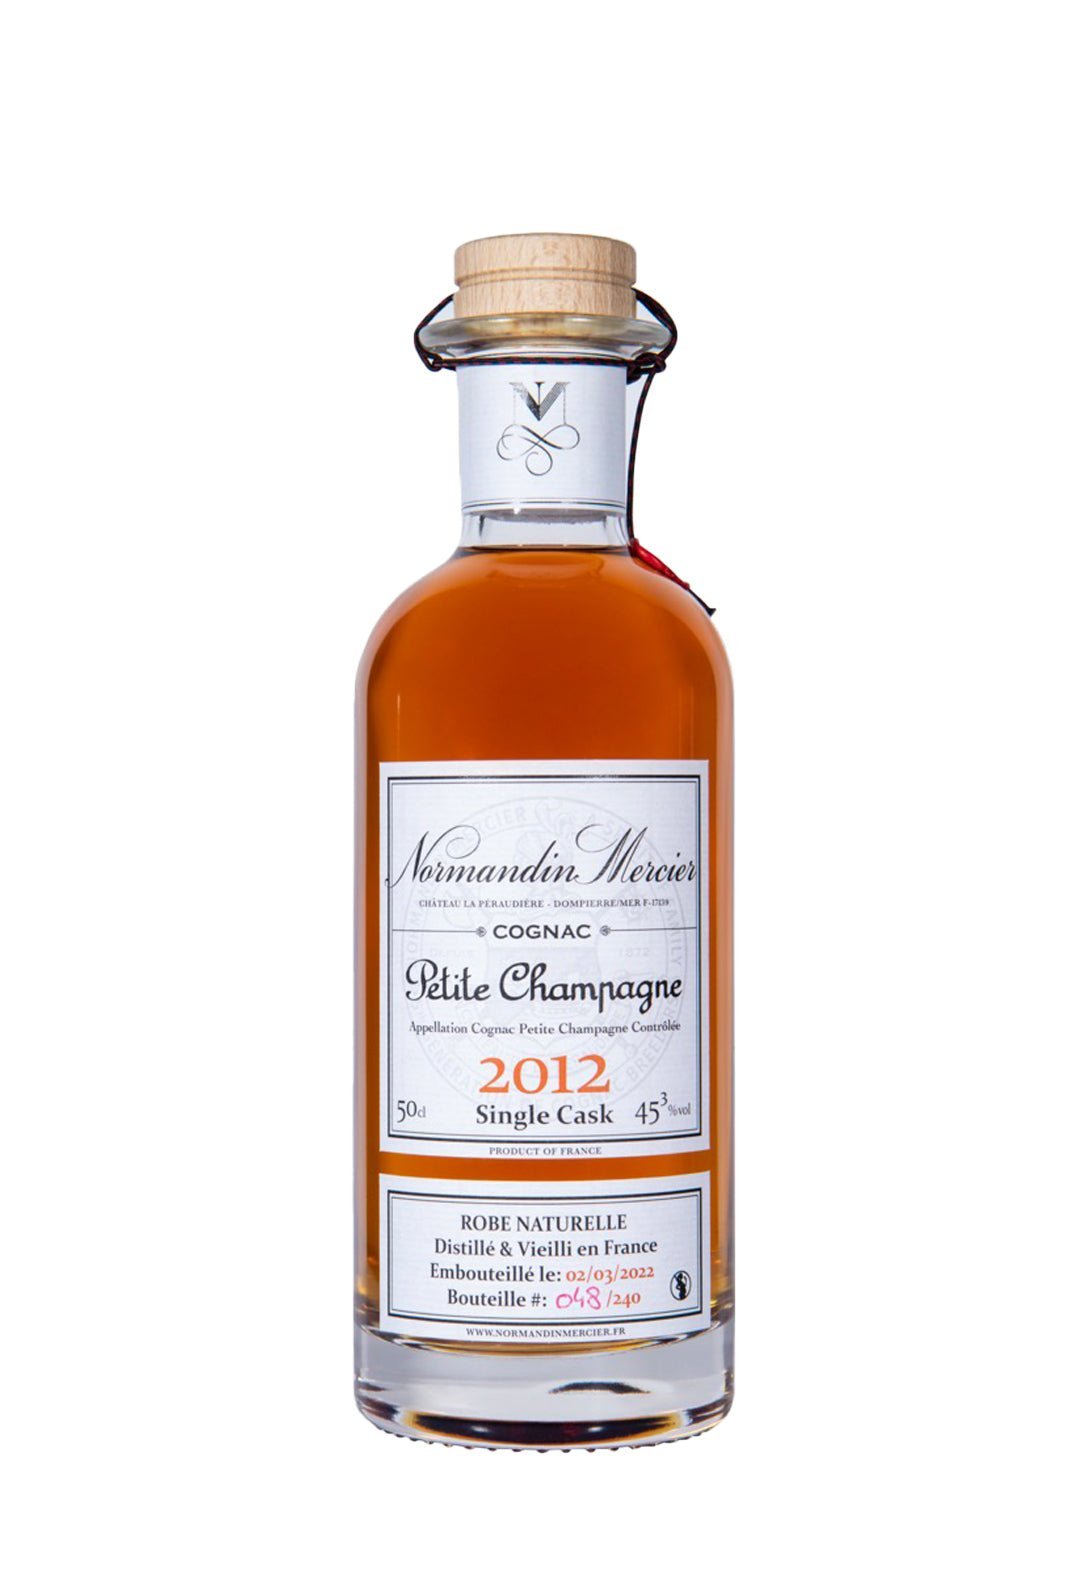 Normandin Mercier 2012 Petite Champagne Millesime 45.3% 500ml | Brandy | Shop online at Spirits of France